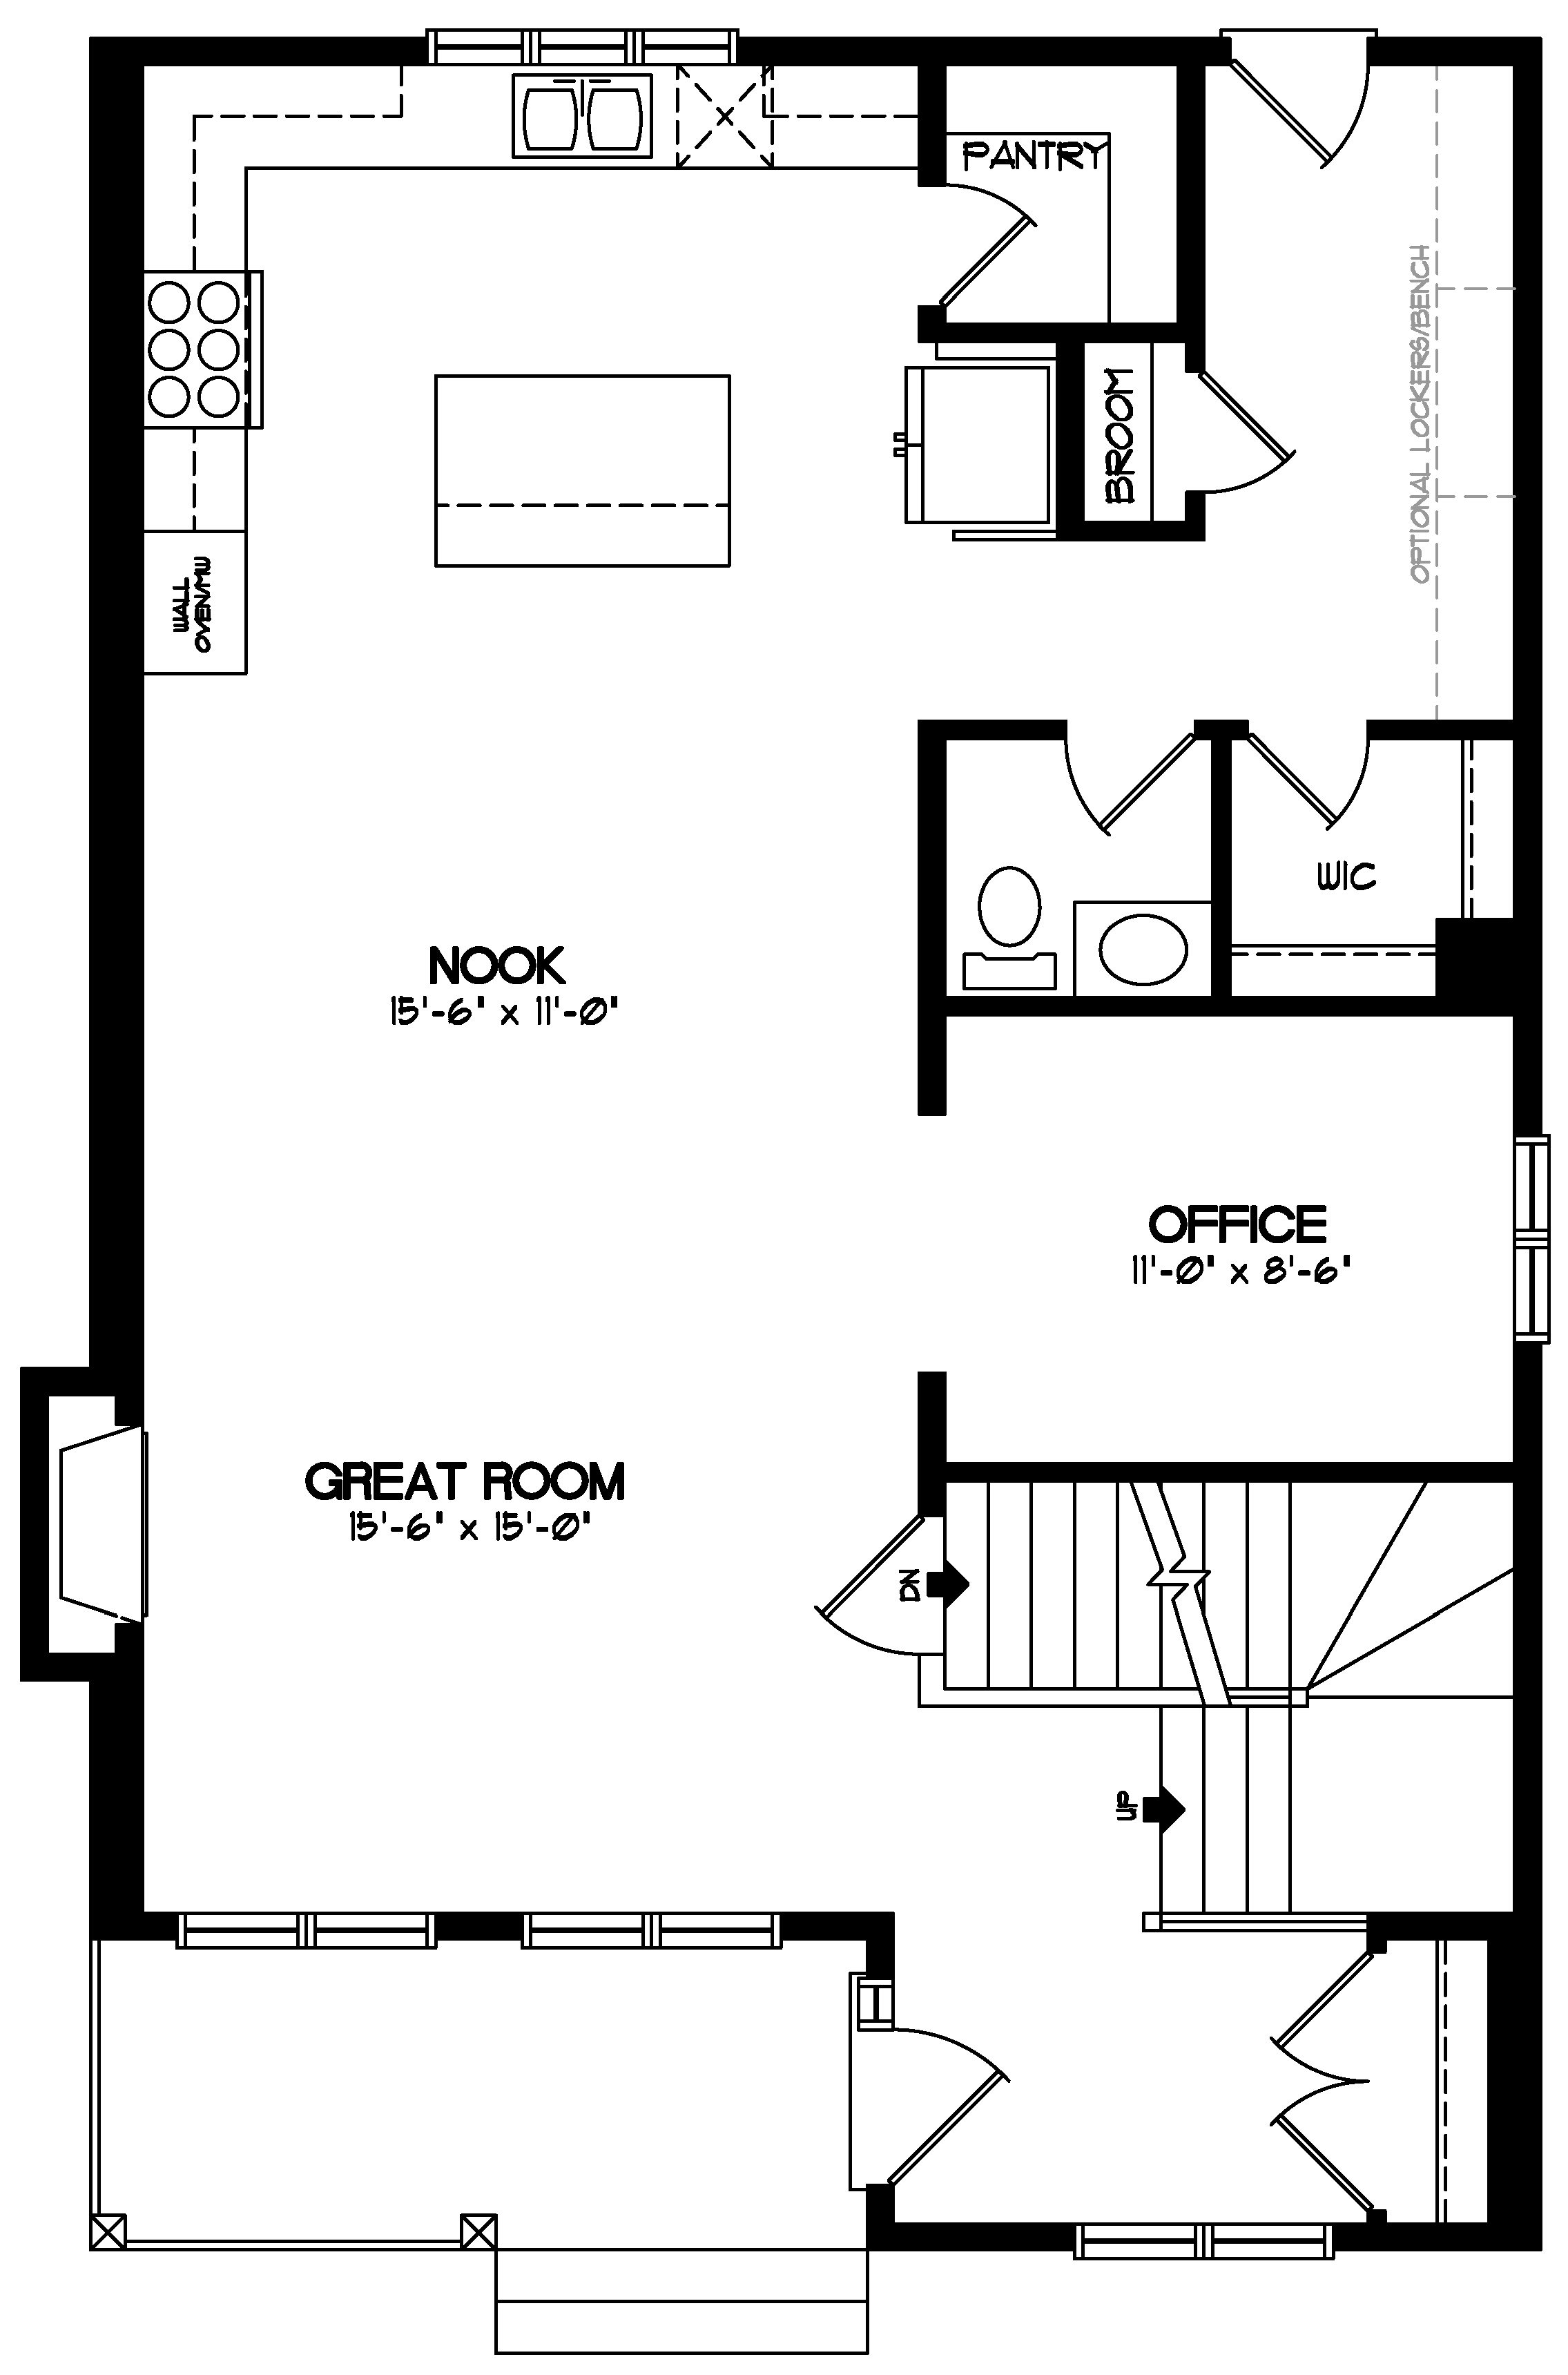 Everly Home Model Floor Plans